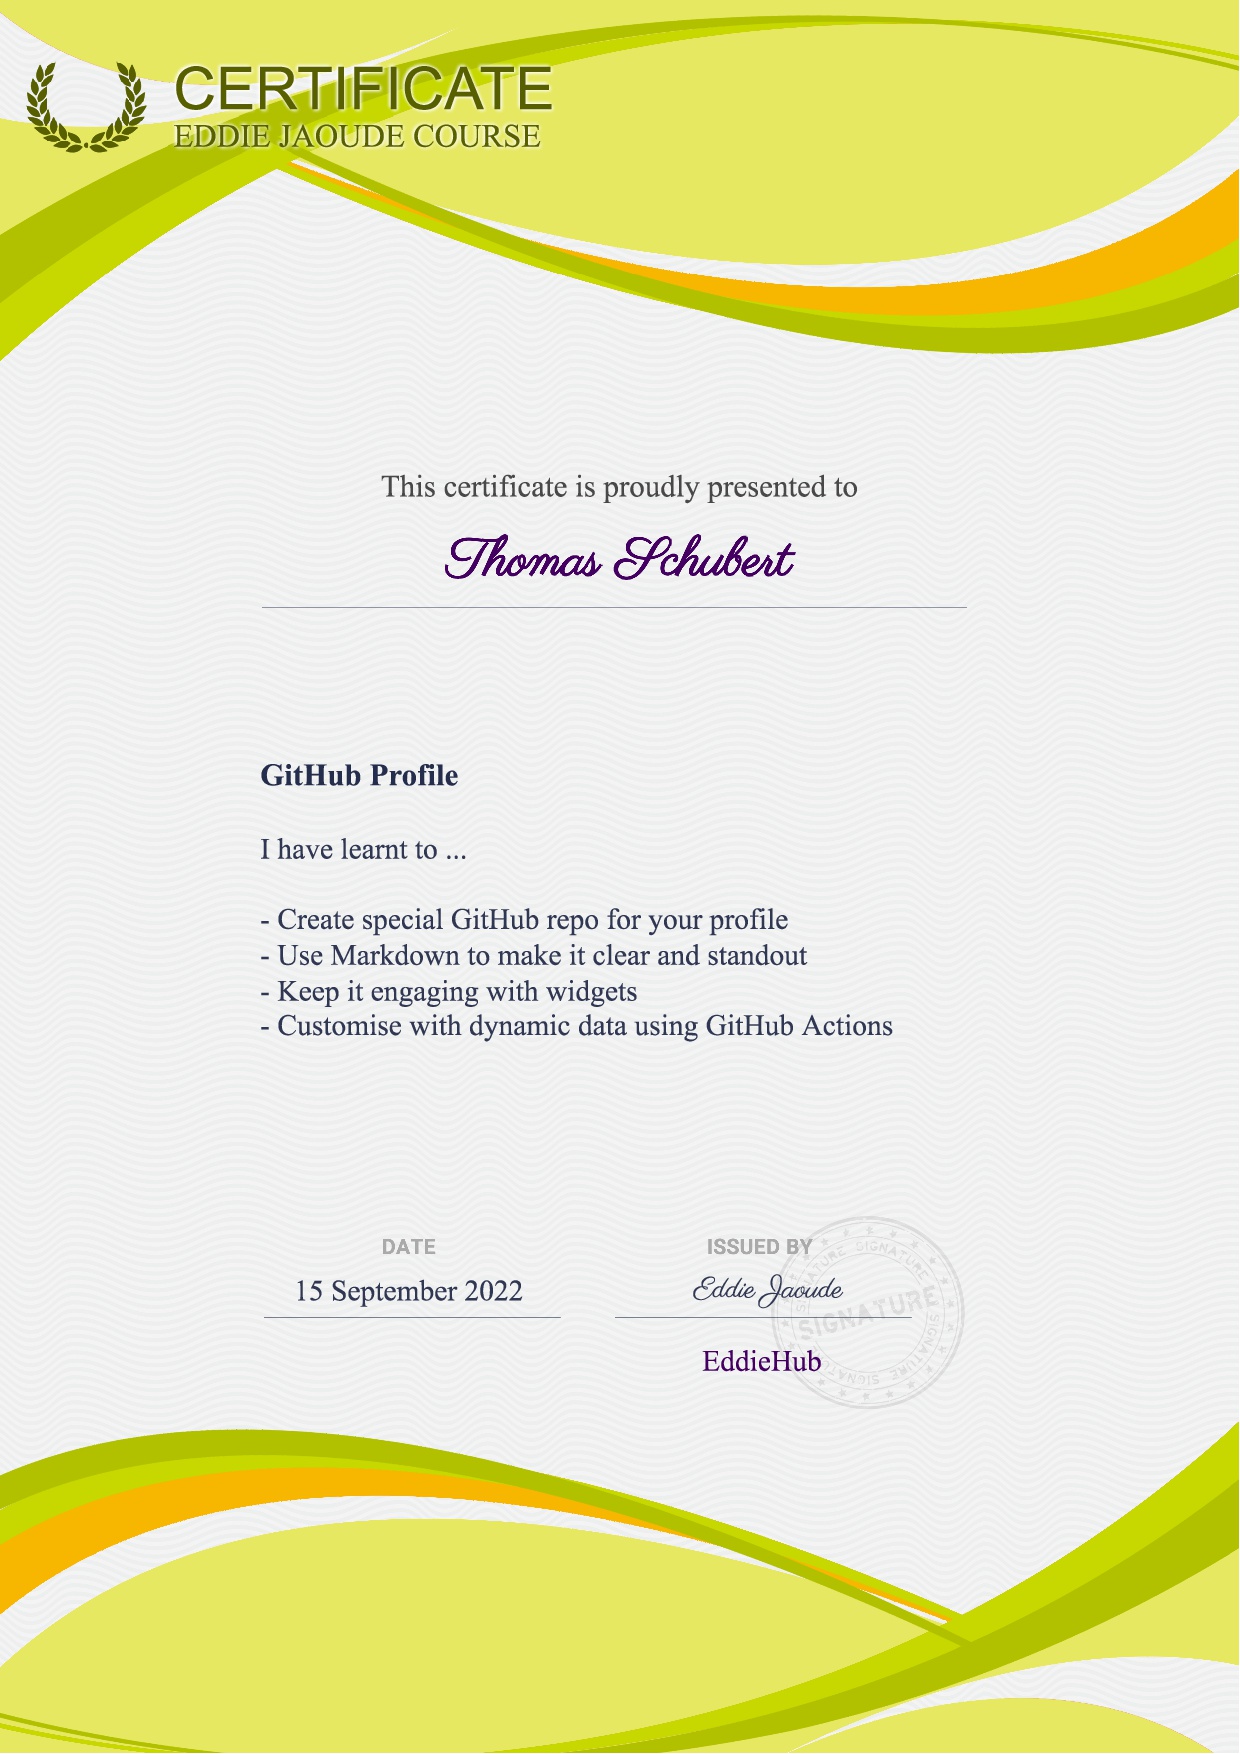 Certificate Eddie Jaoude Course.jpg